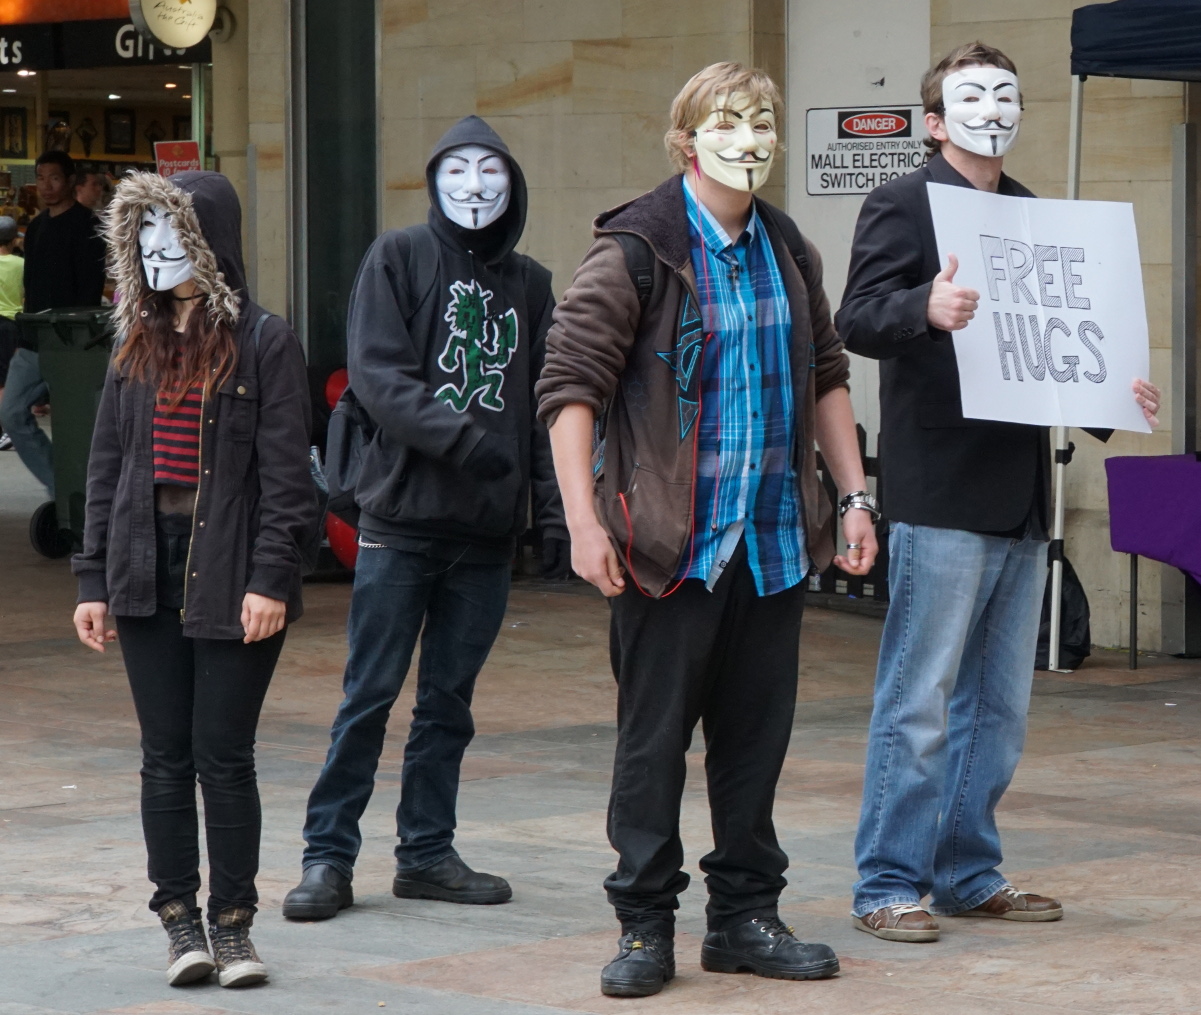 Anonymous Activists in Perth, Australia